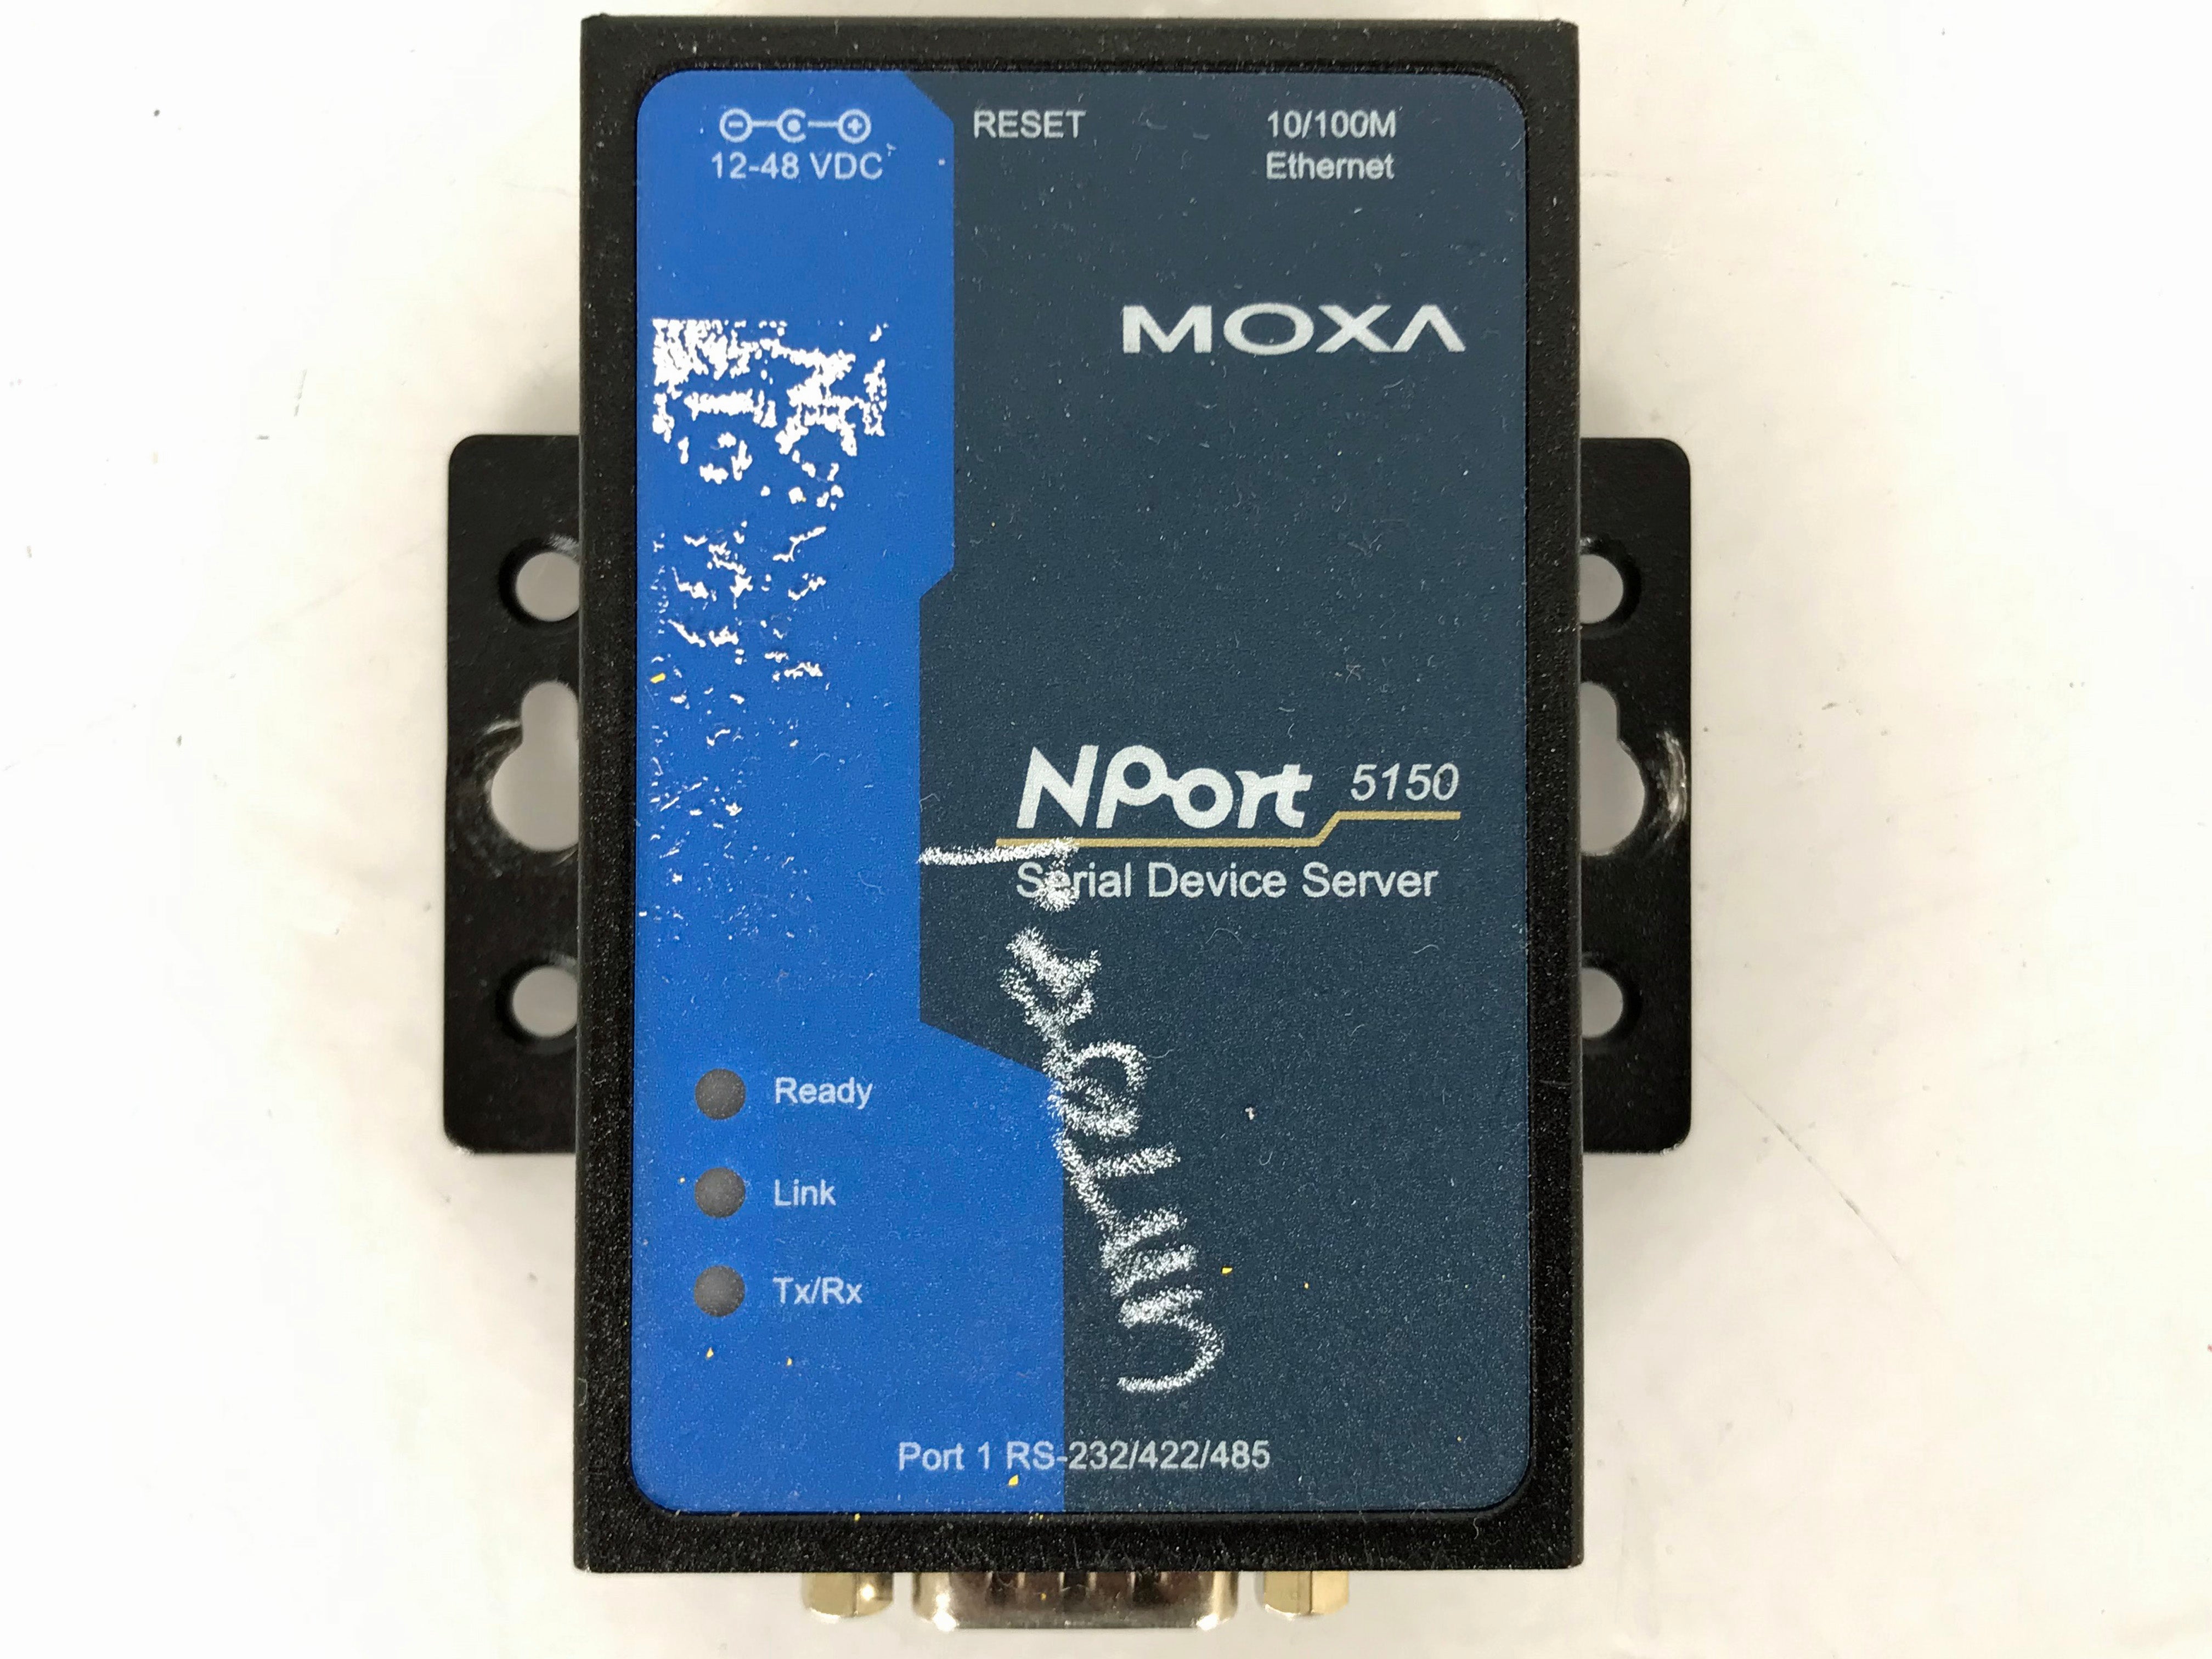 MOXA NPort 5150 Serial Device Server